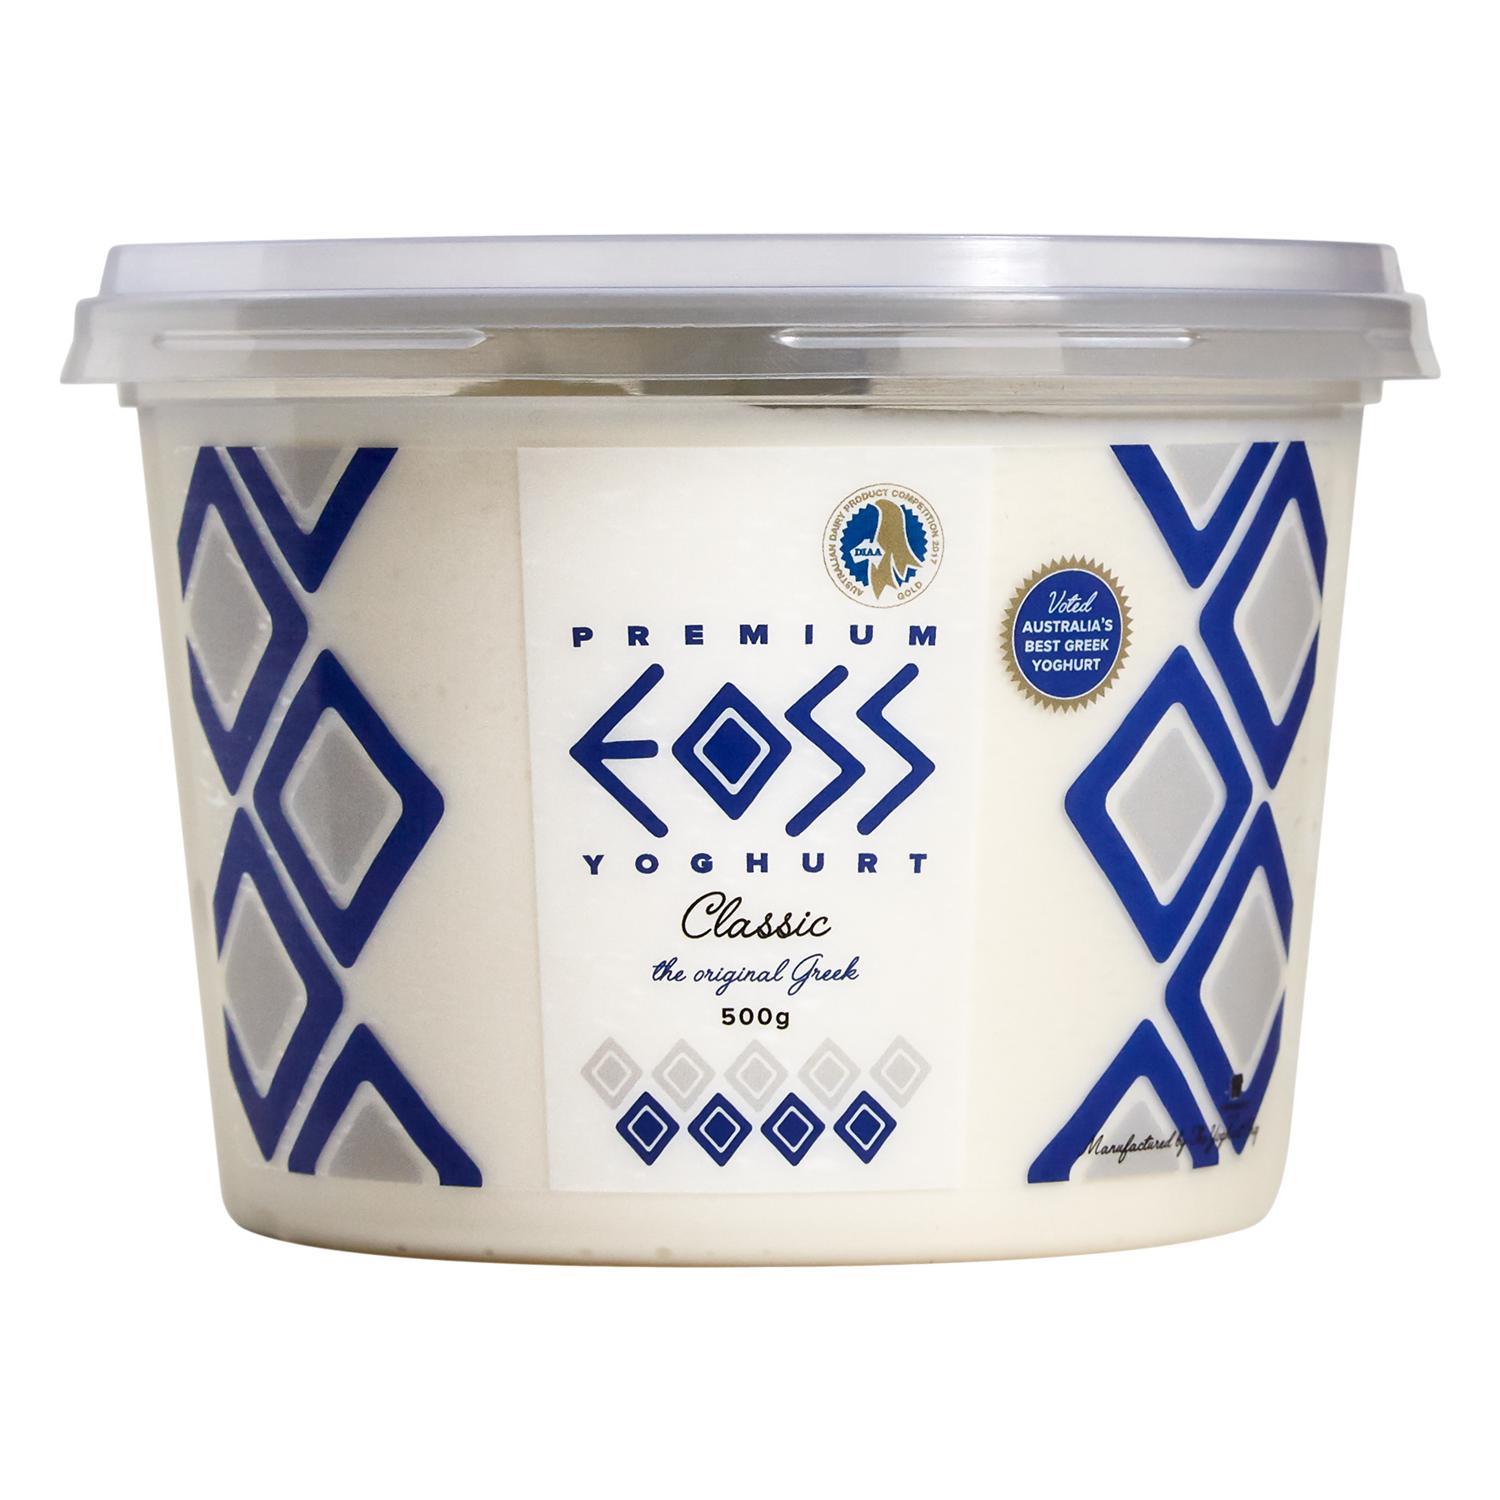 EOSS Yoghurt Classic Tub 500g